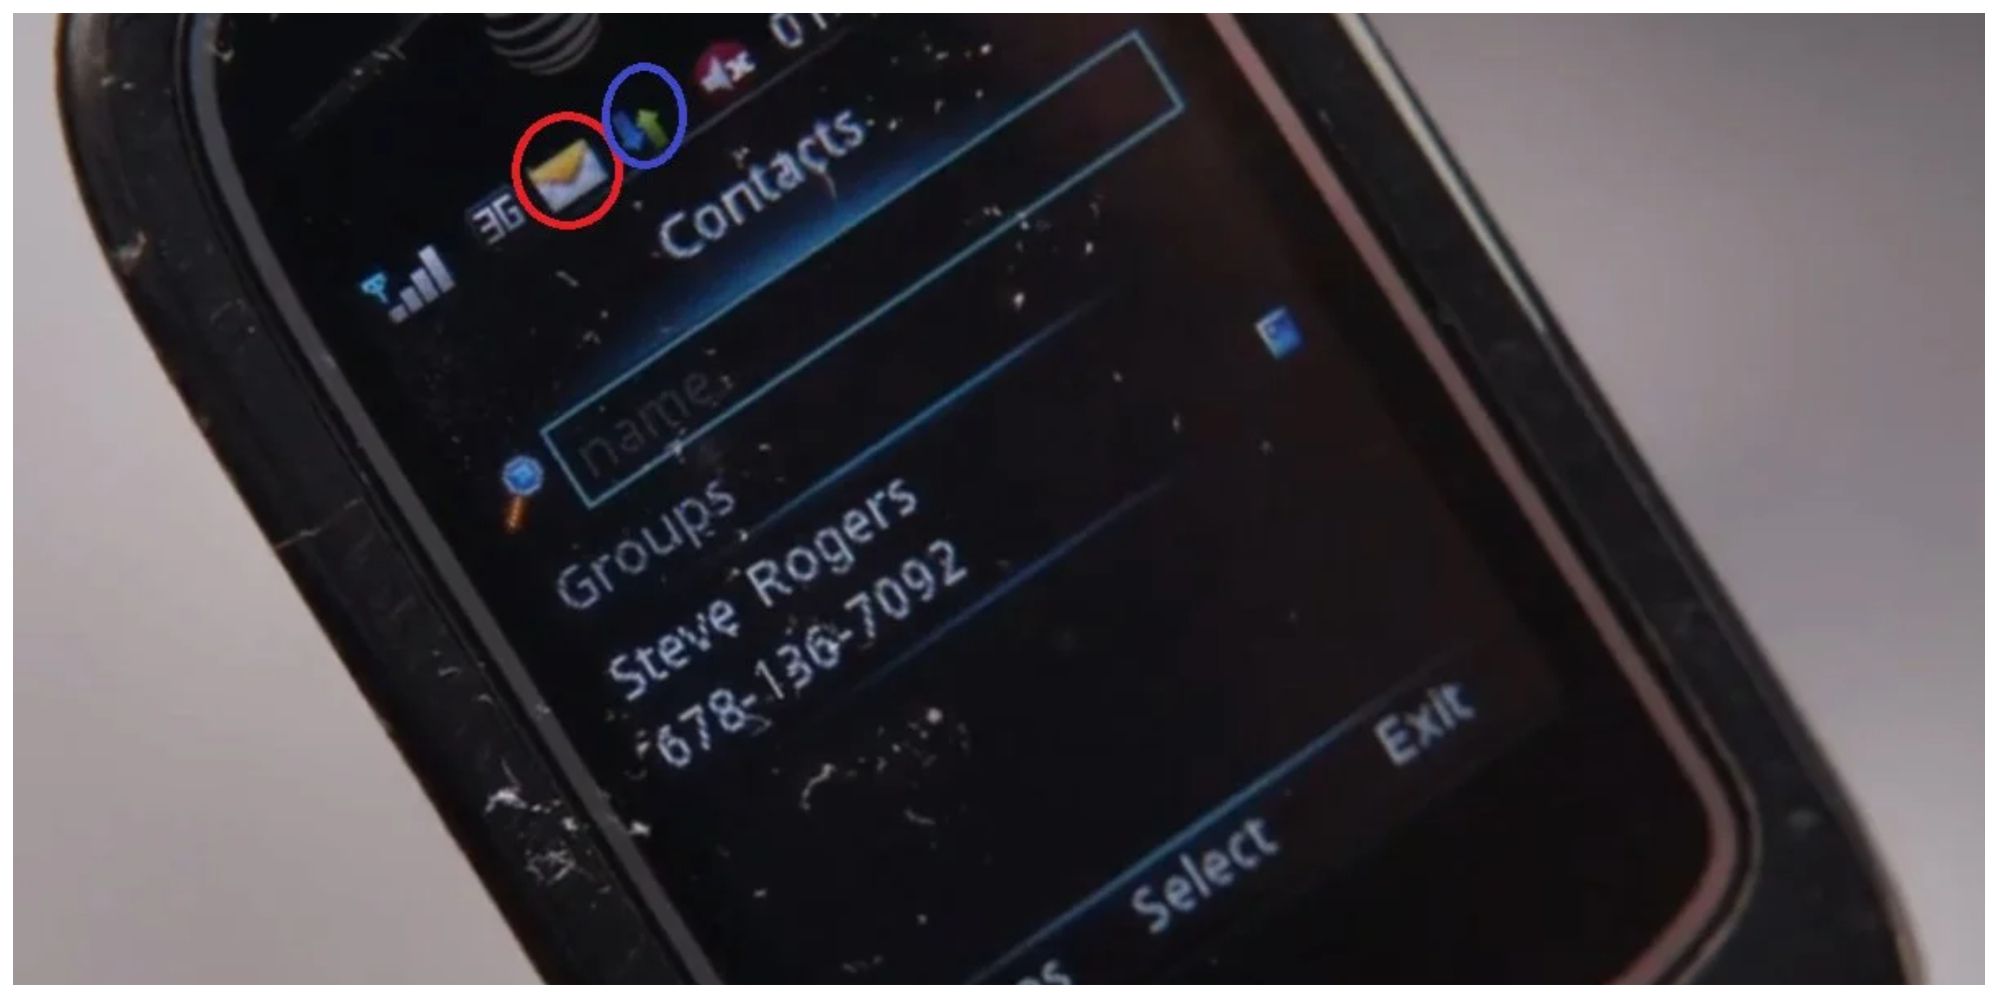 Cell phone Steve Rogers sent to Tony Stark